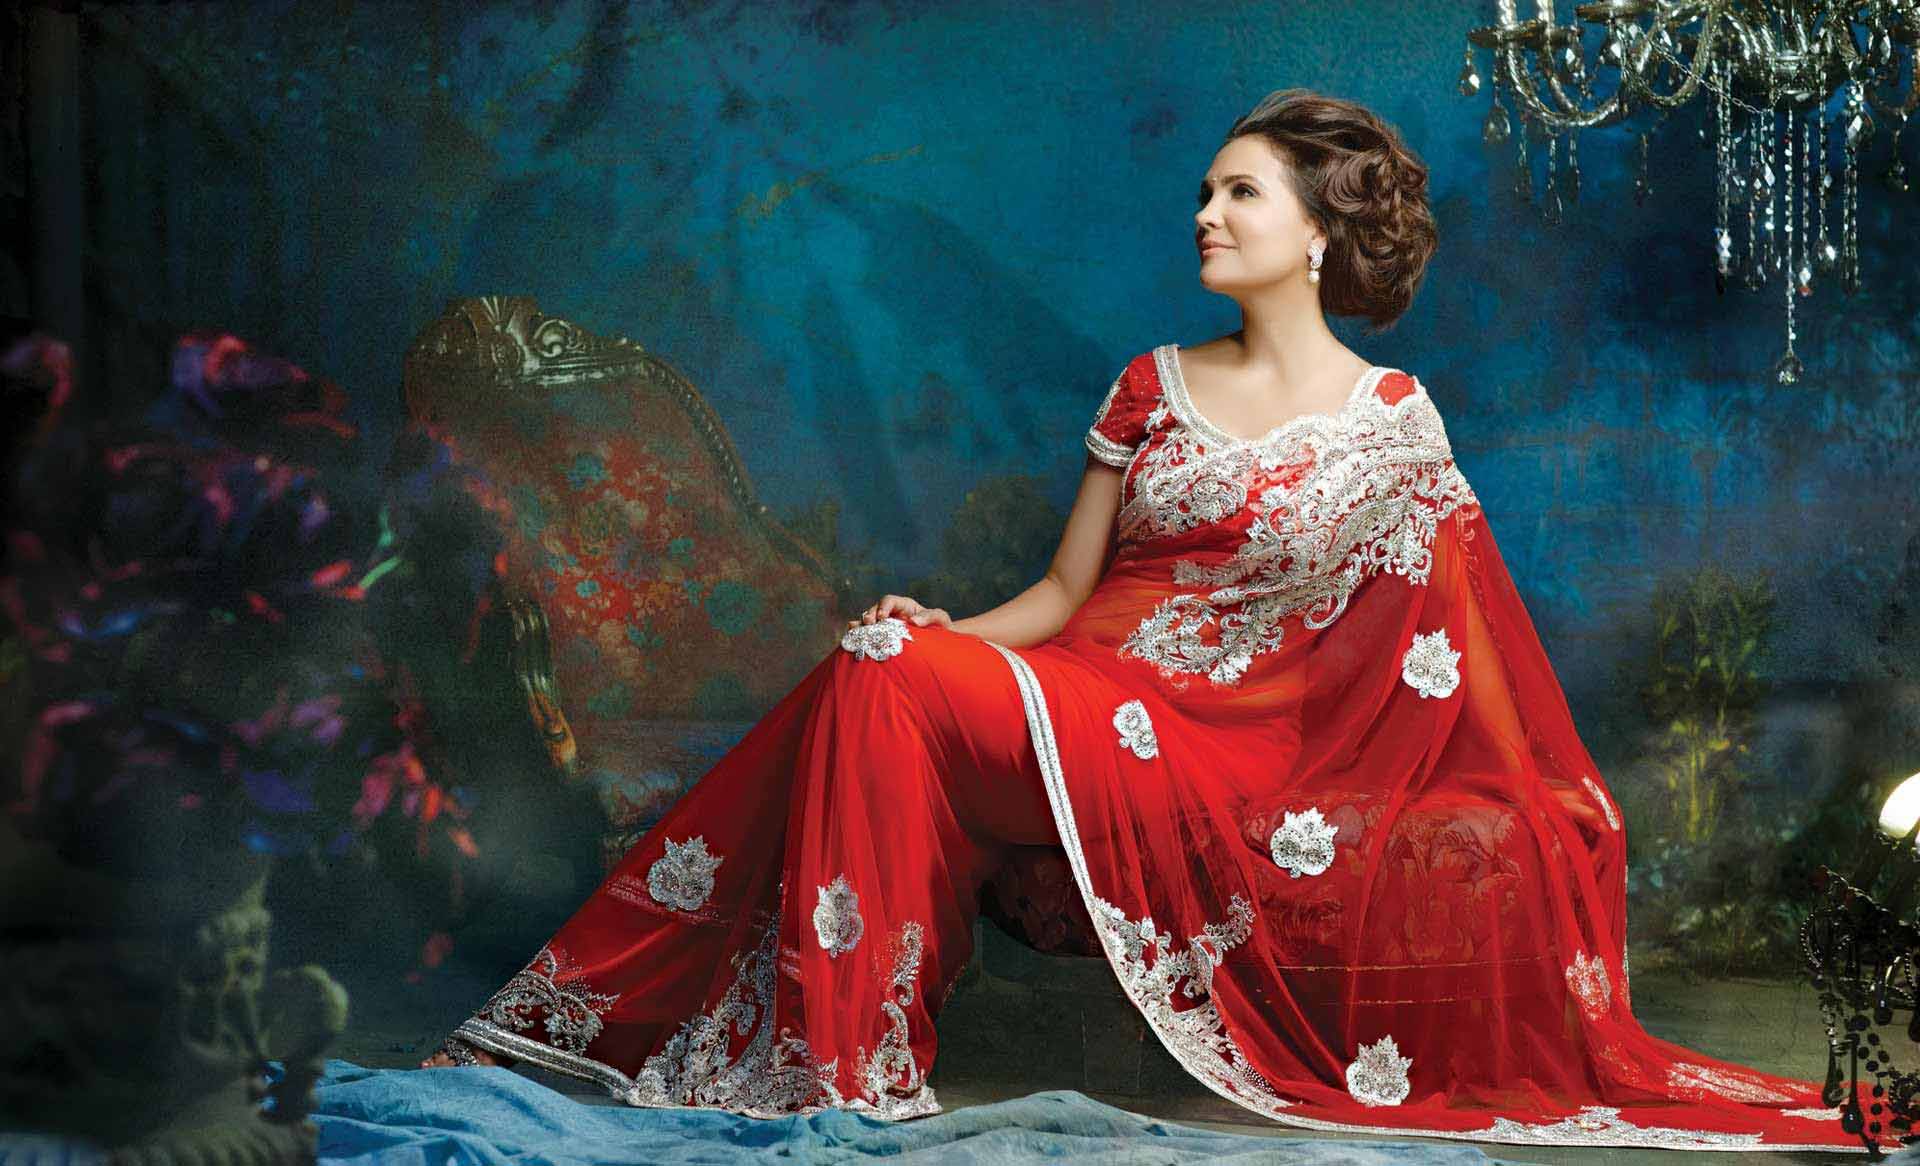 Lara-Dutta-in-red-saree-high-definition-wallpapers